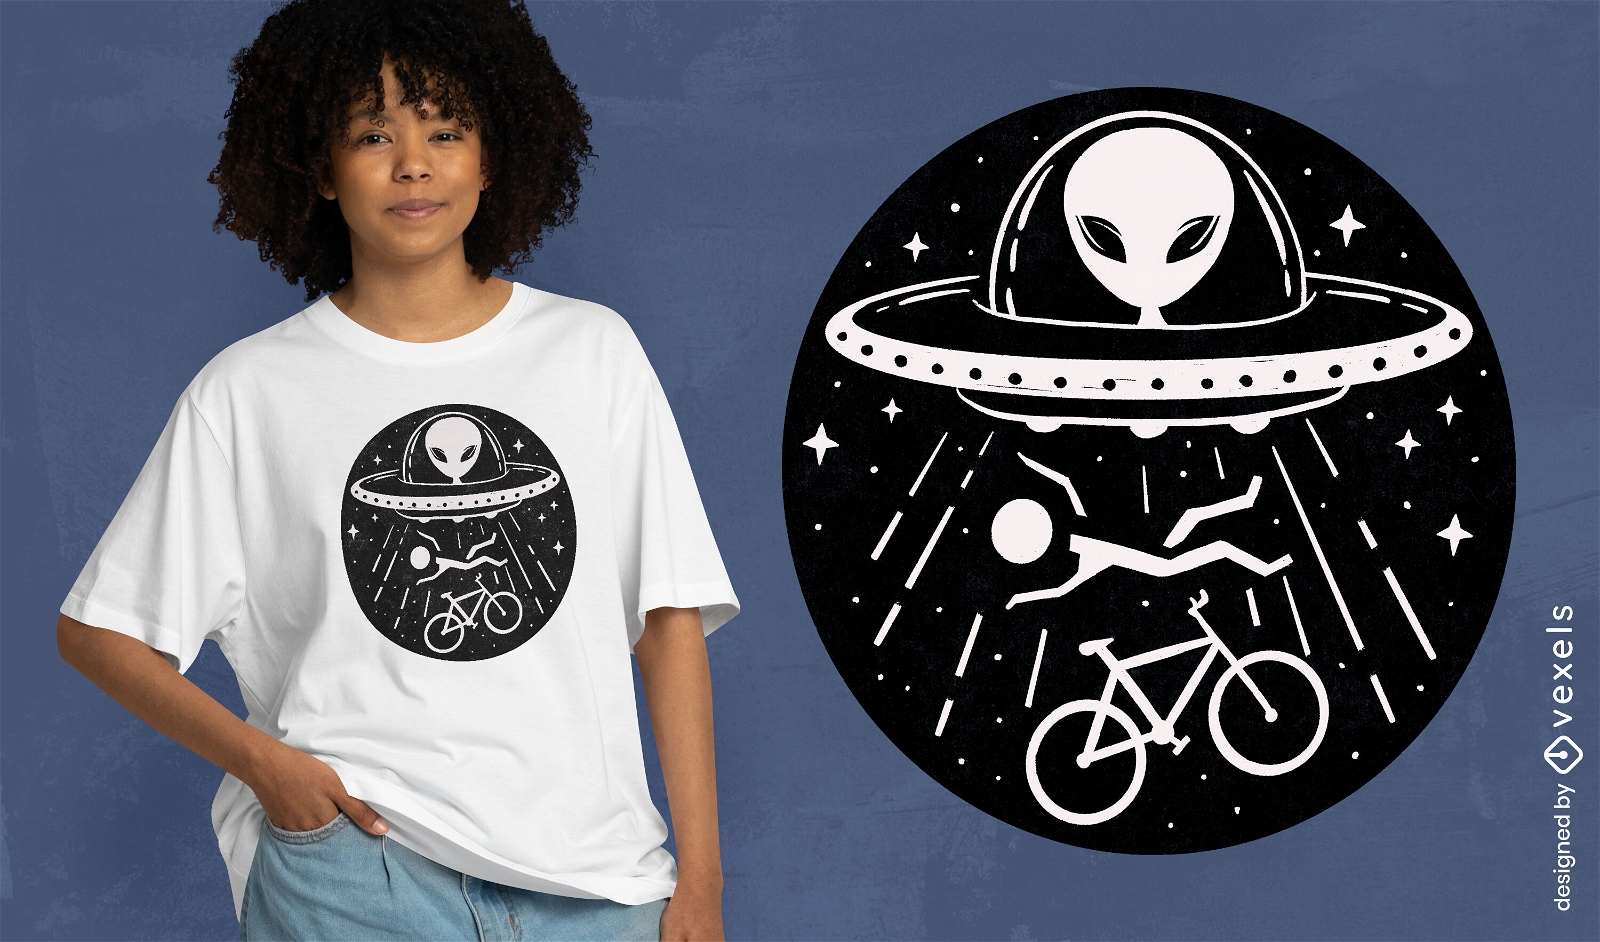 Alien abduction spaceship t-shirt design